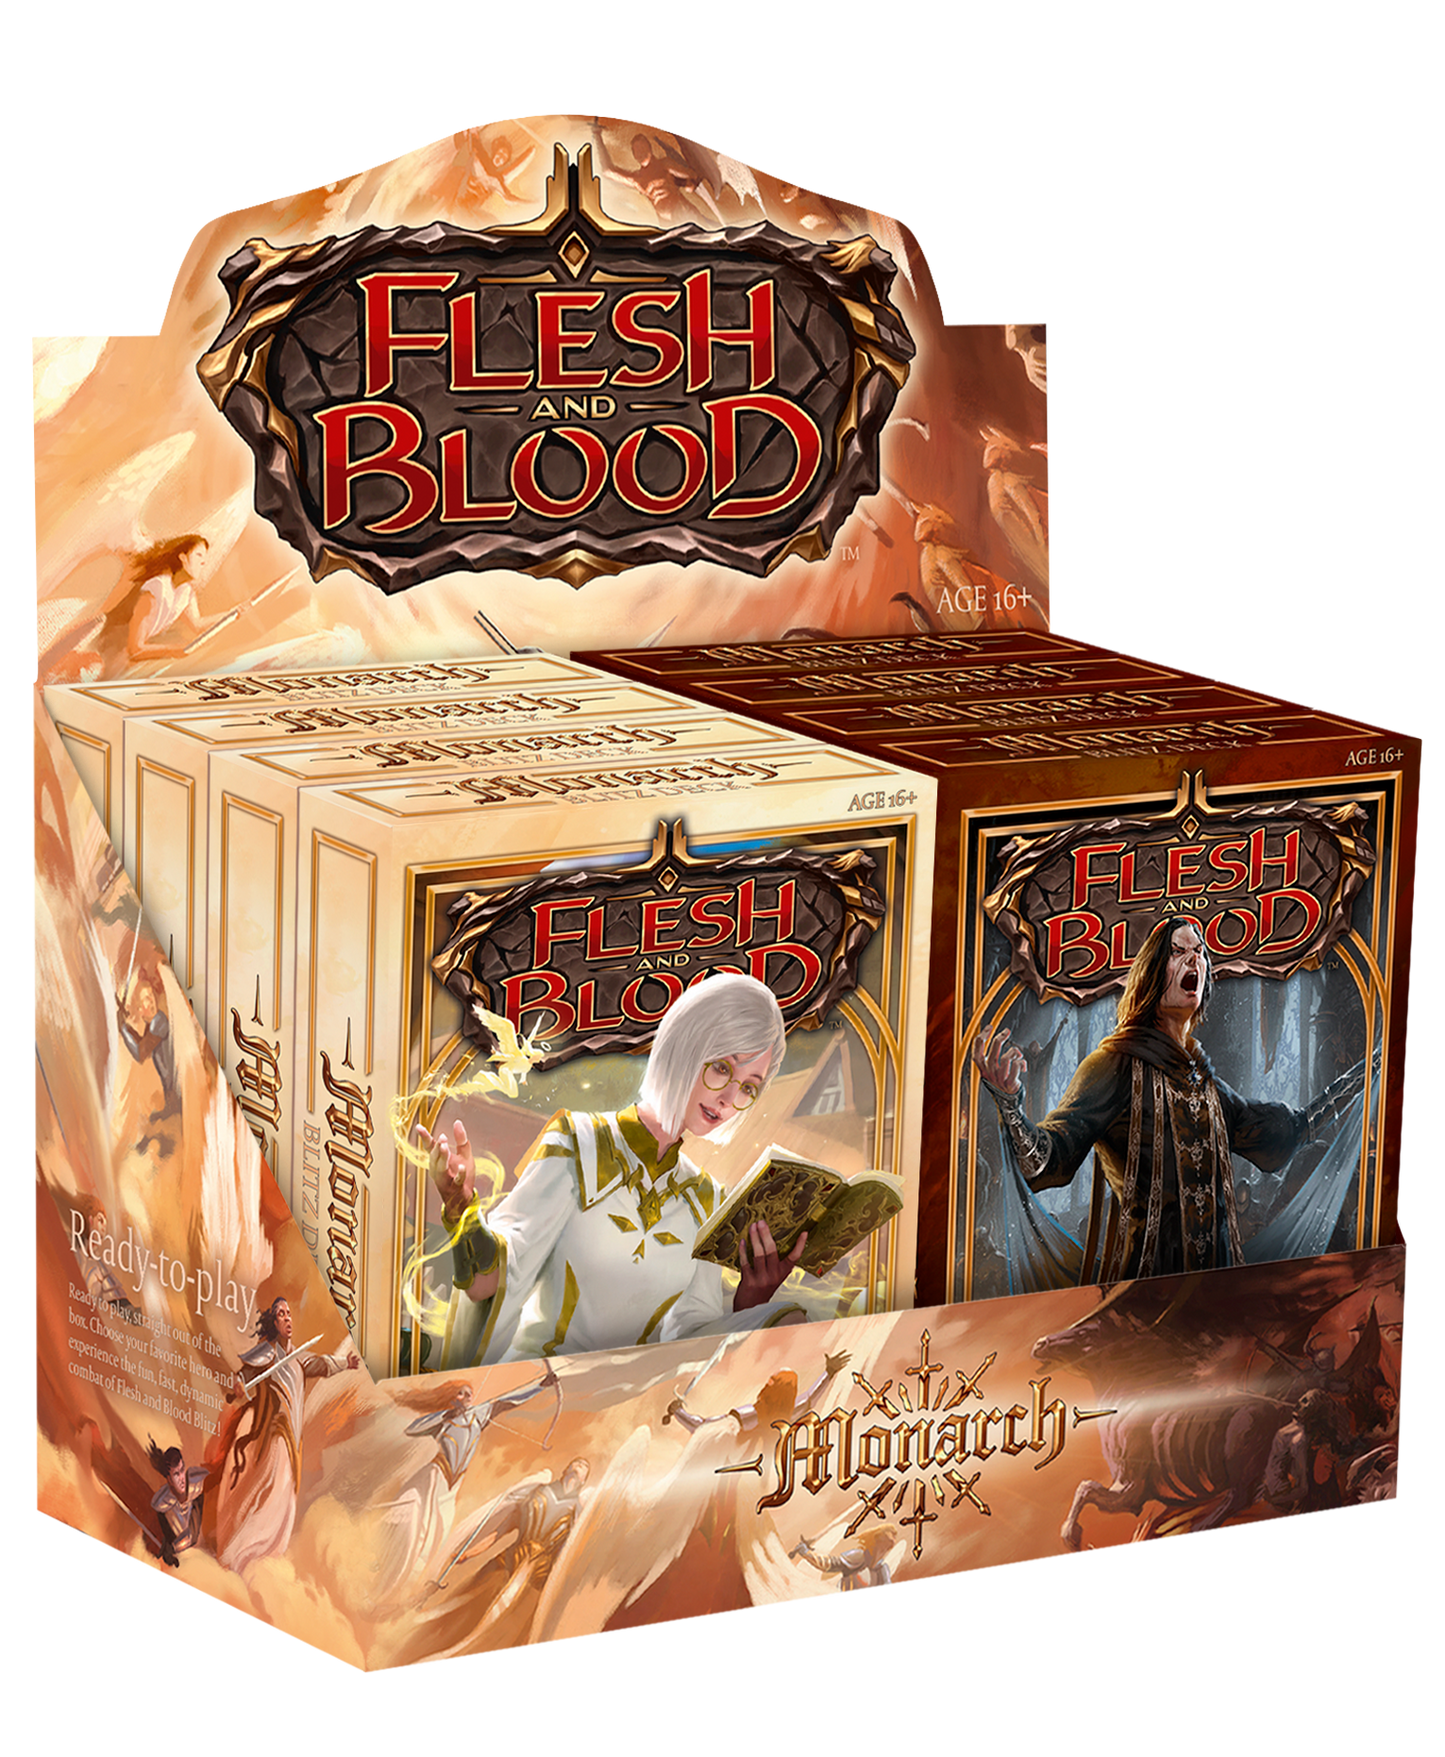 Flesh and Blood - Monarch Blitz Deck